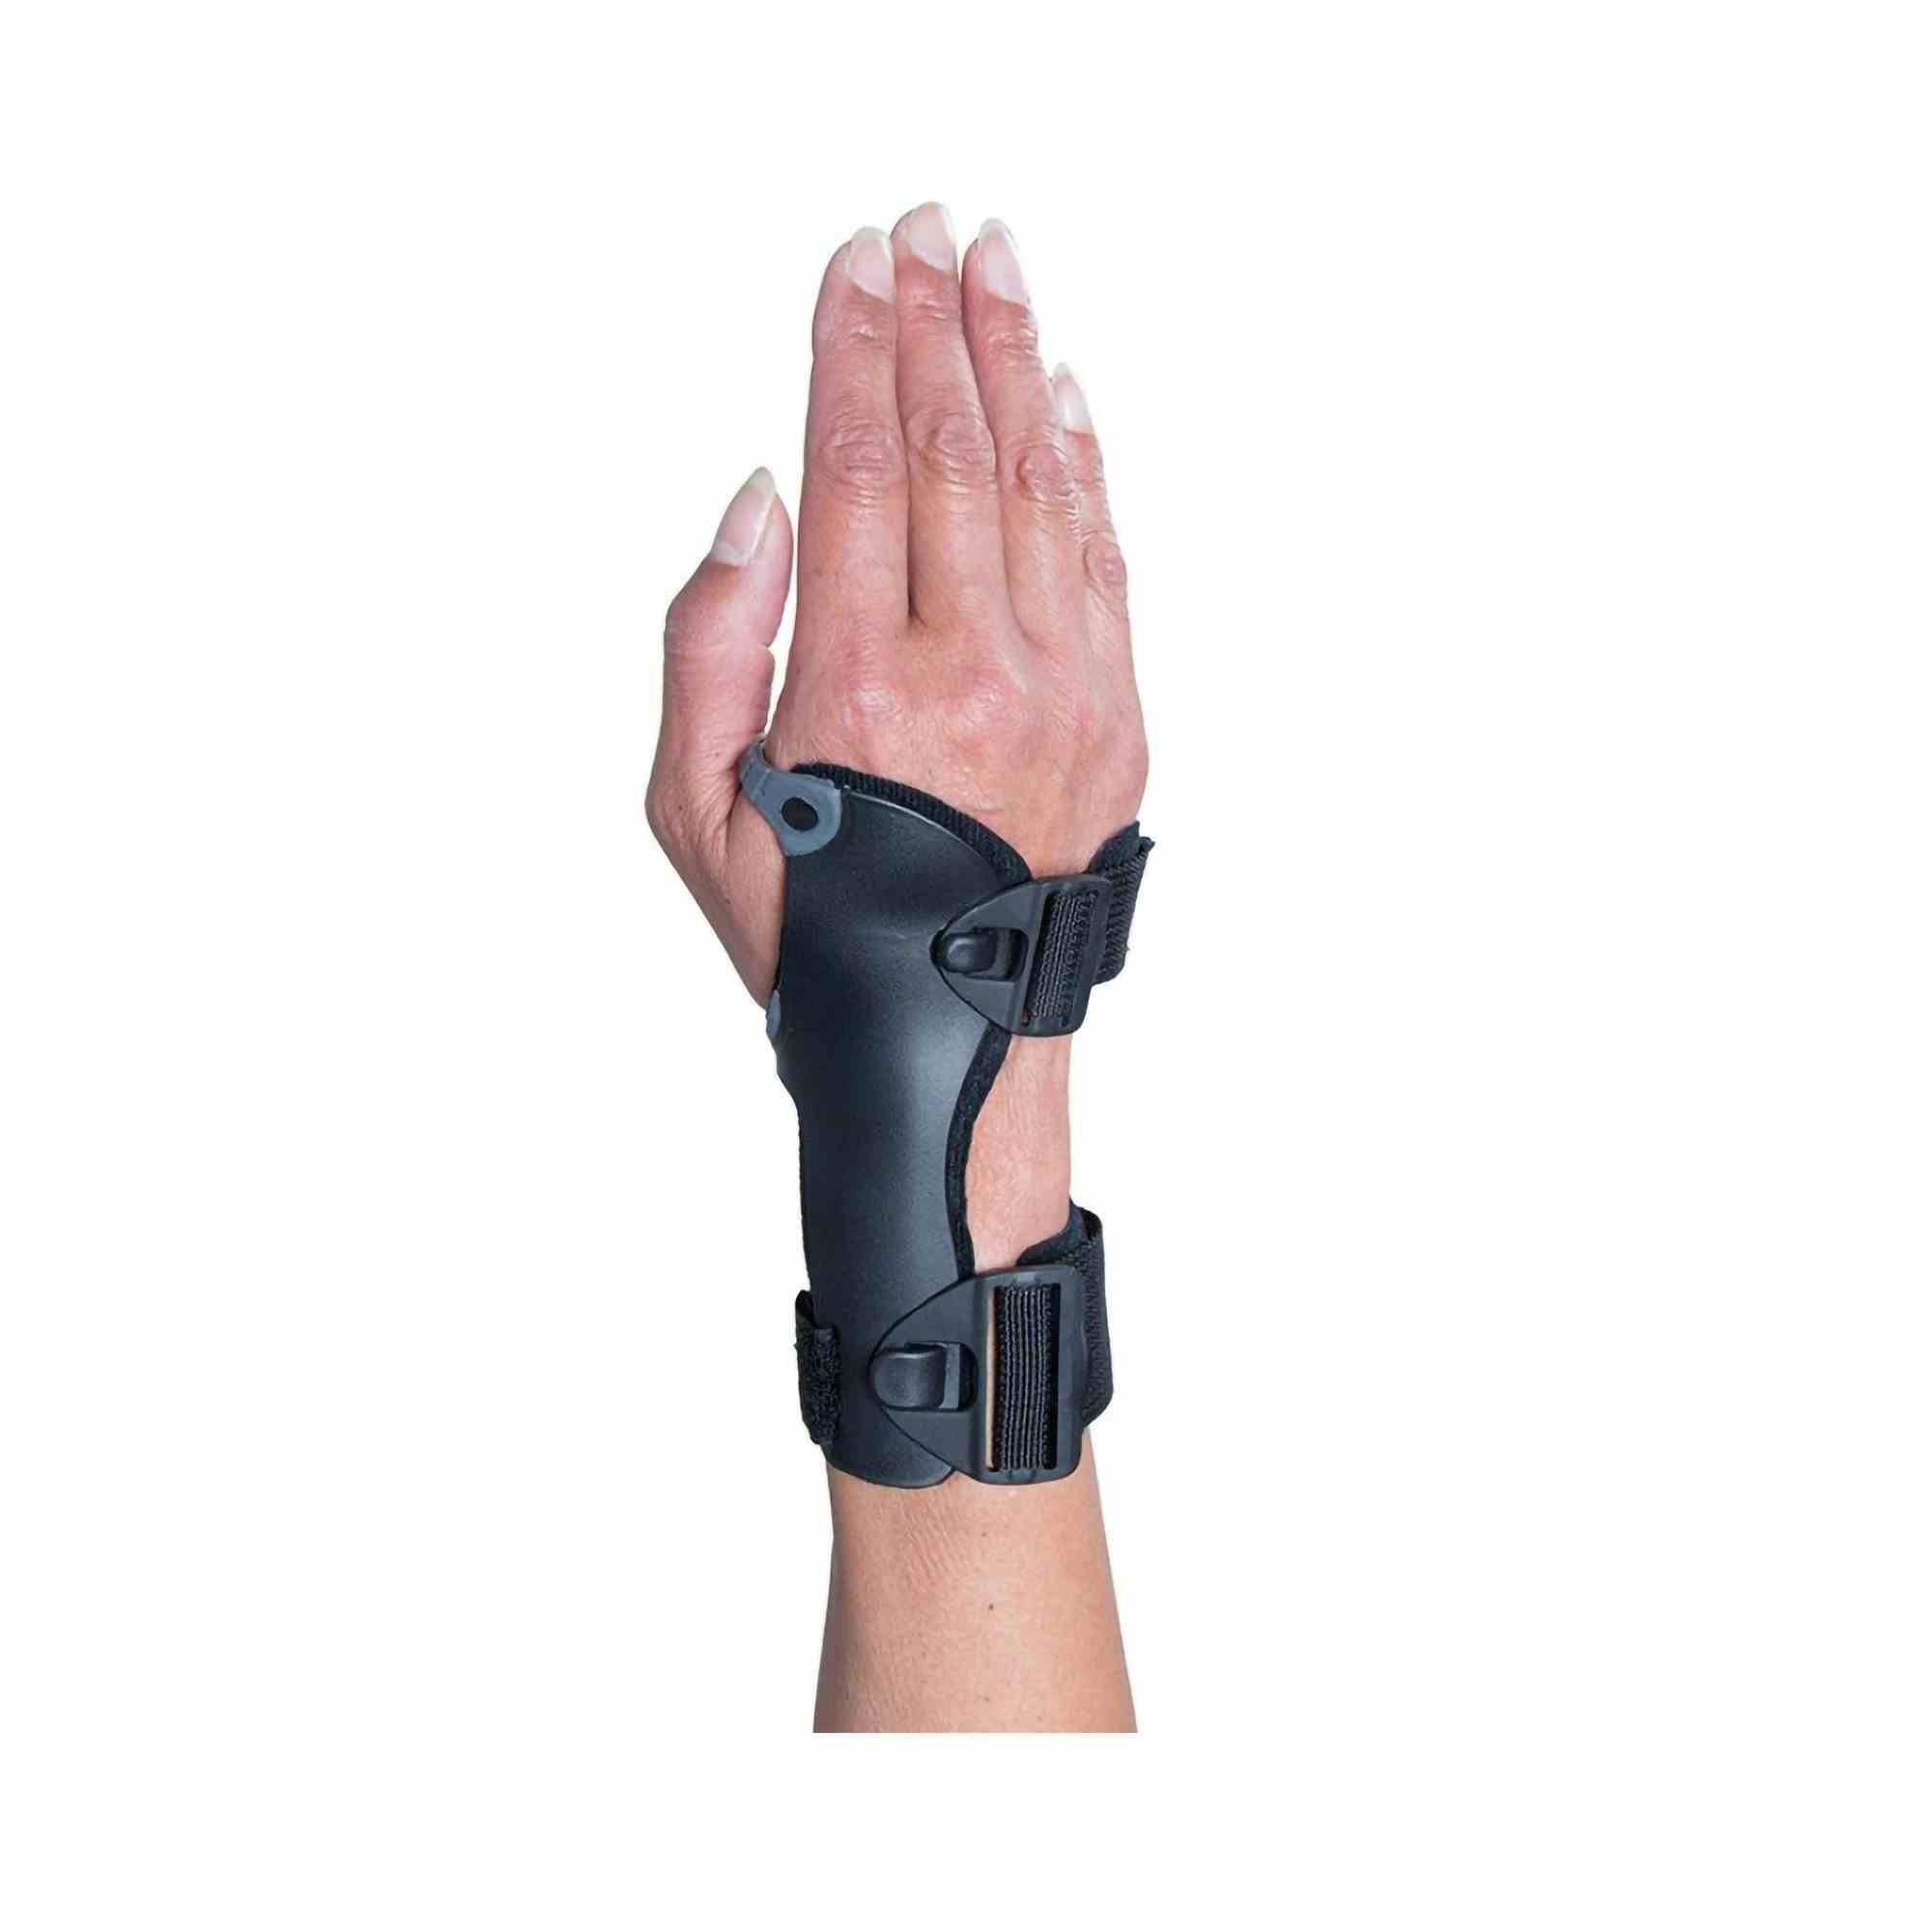 Ossur Exoform Right Carpal Tunnel Wrist Support, 517075, Medium (Wrist 6.5-7.75"/Palm 8-9.25") - 1 Each